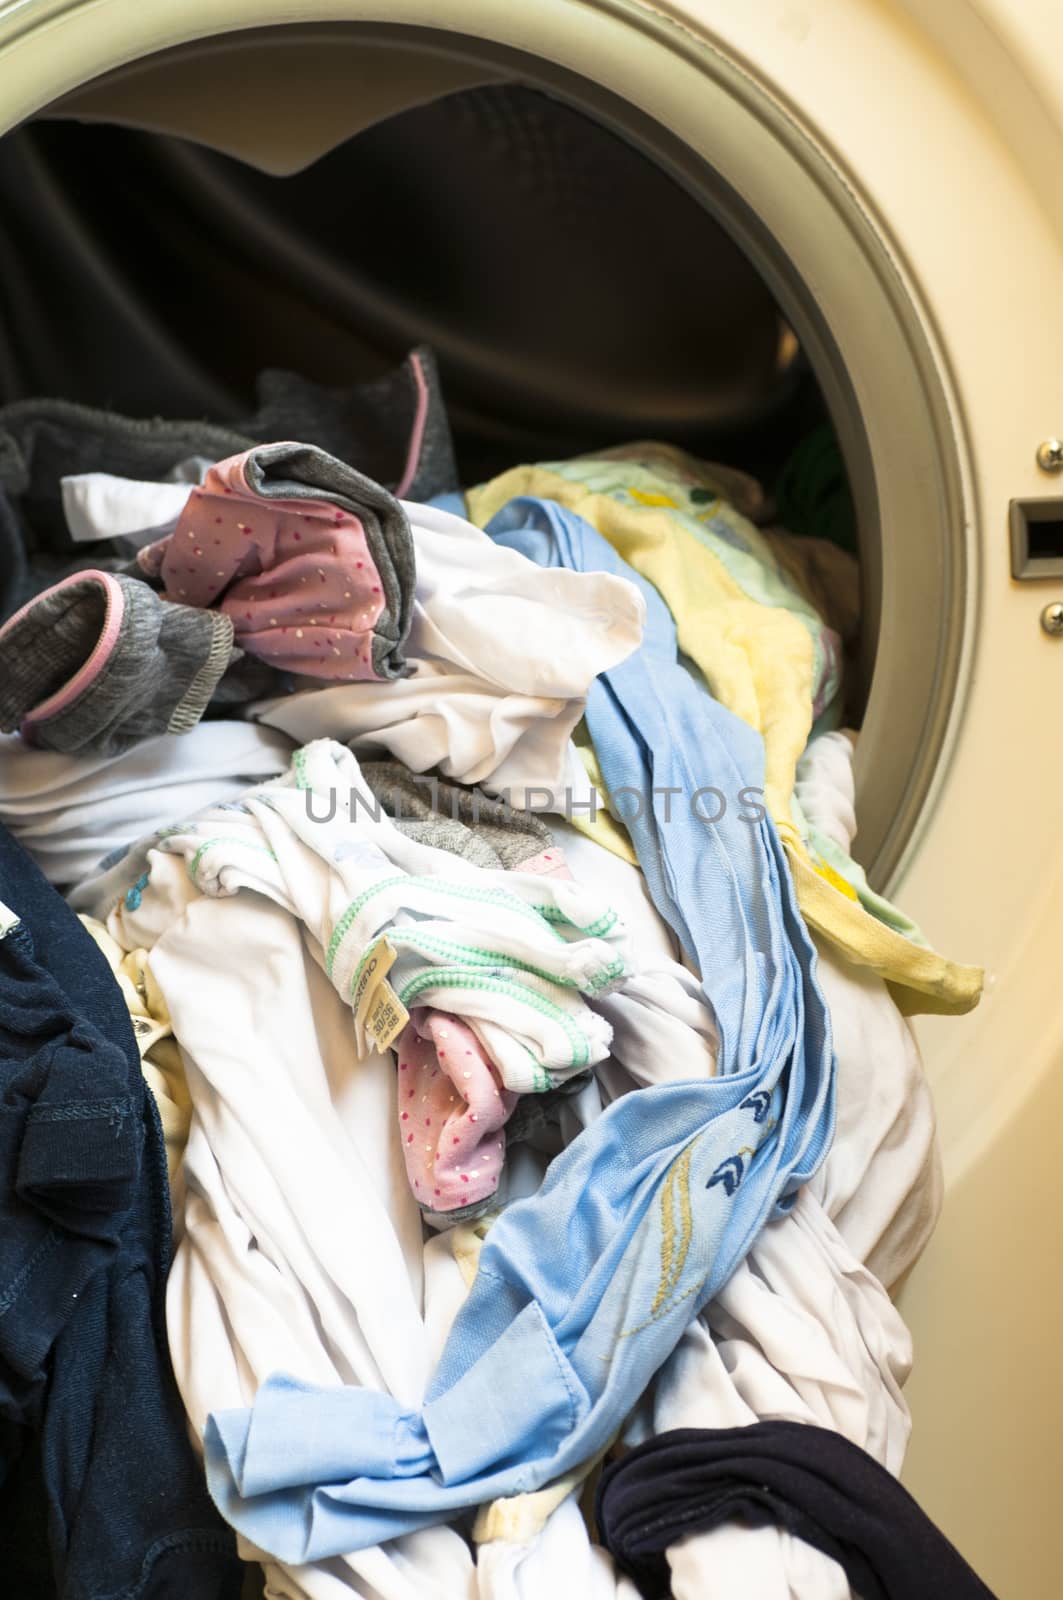 laundry in the washing machine